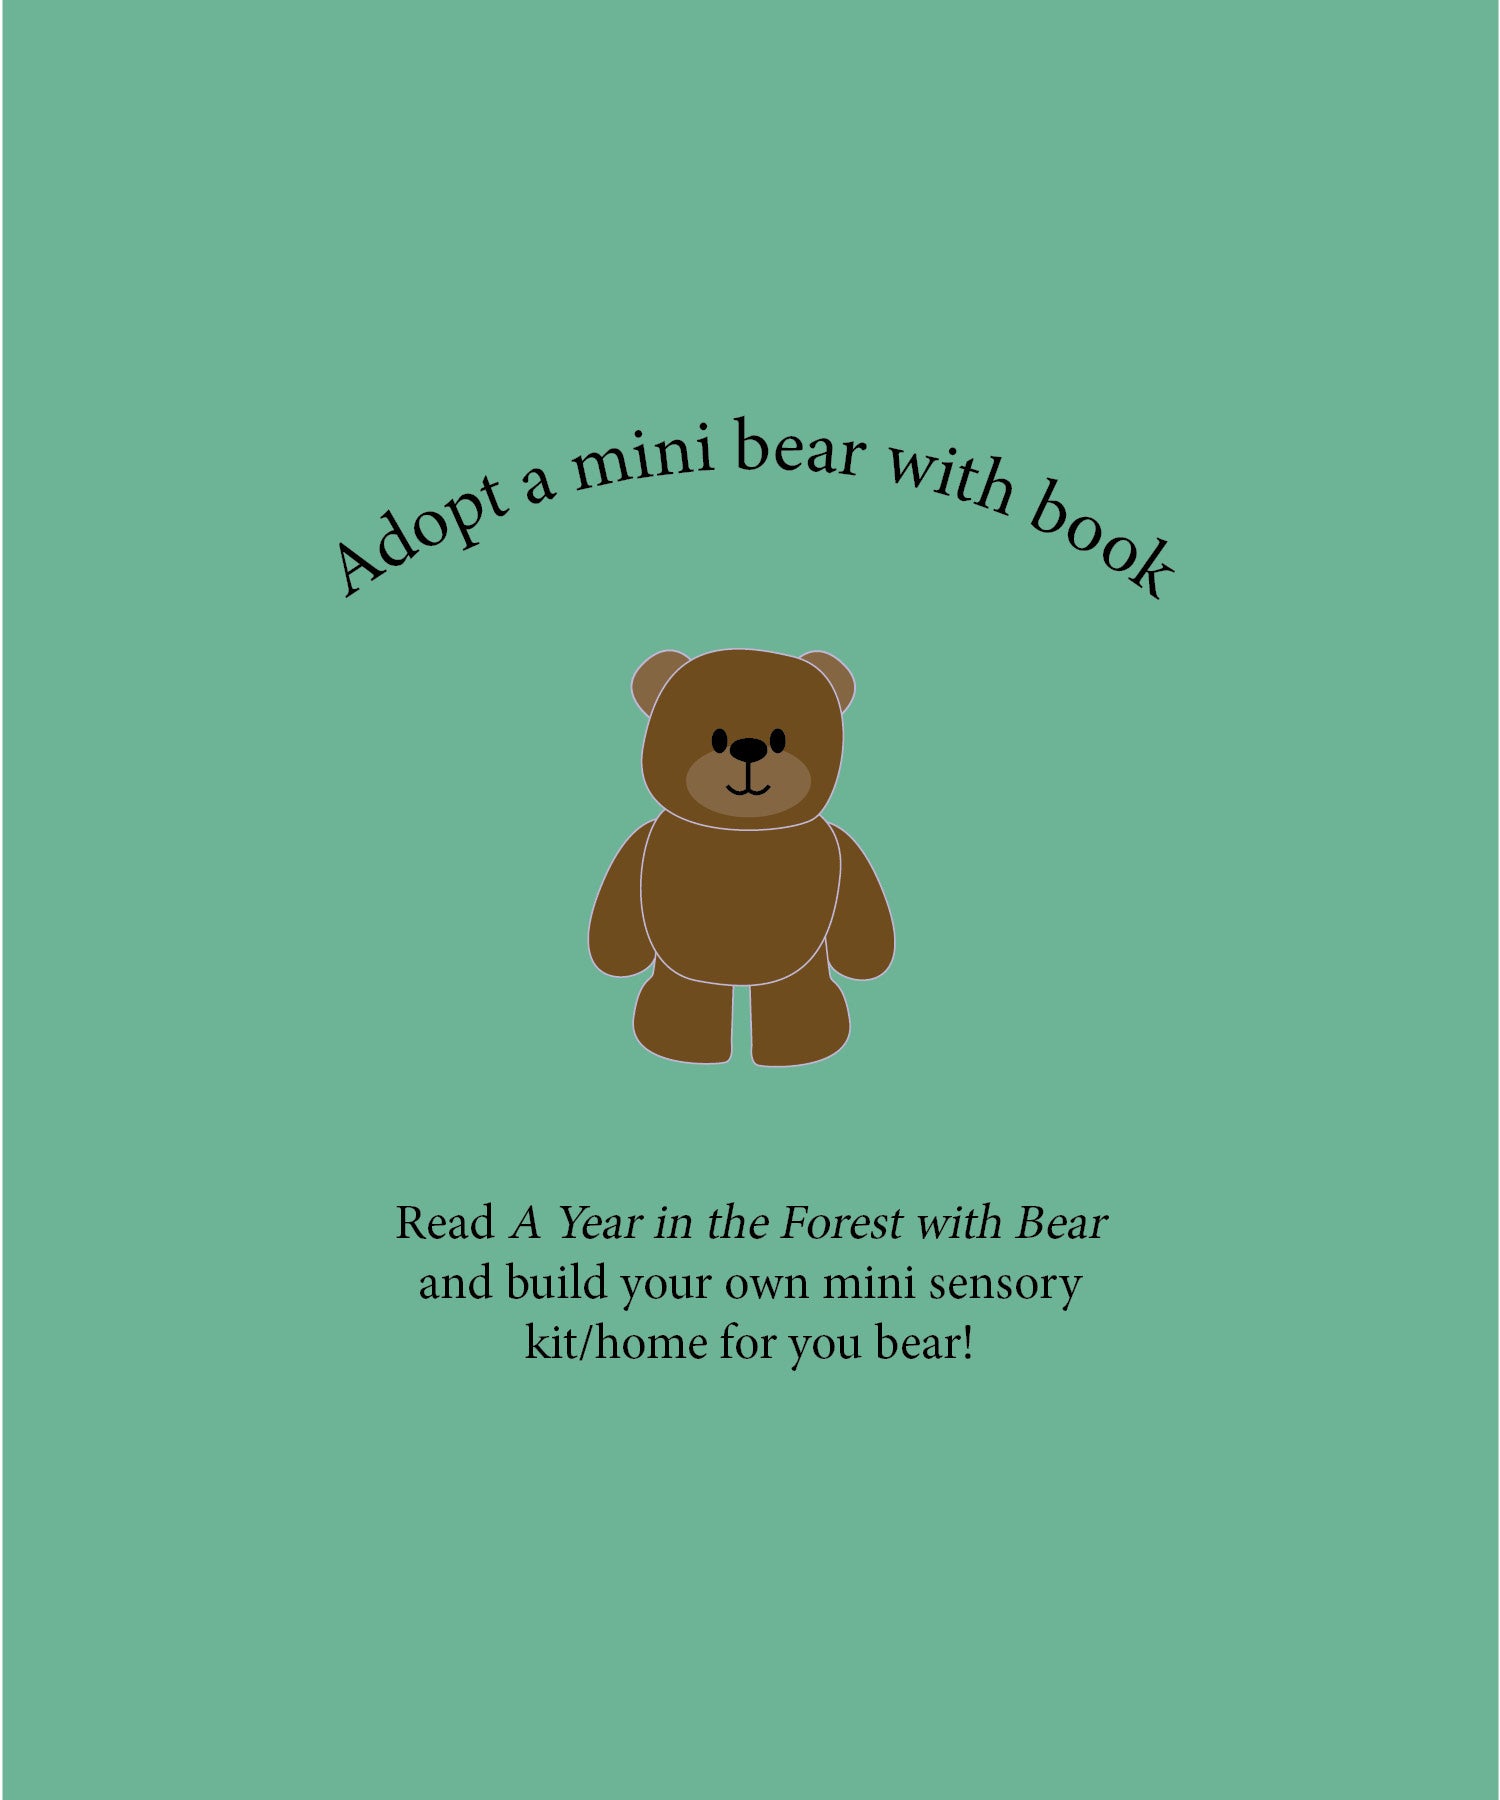 Adopt a Mini Bear and Book (May 18th, 11-1pm)